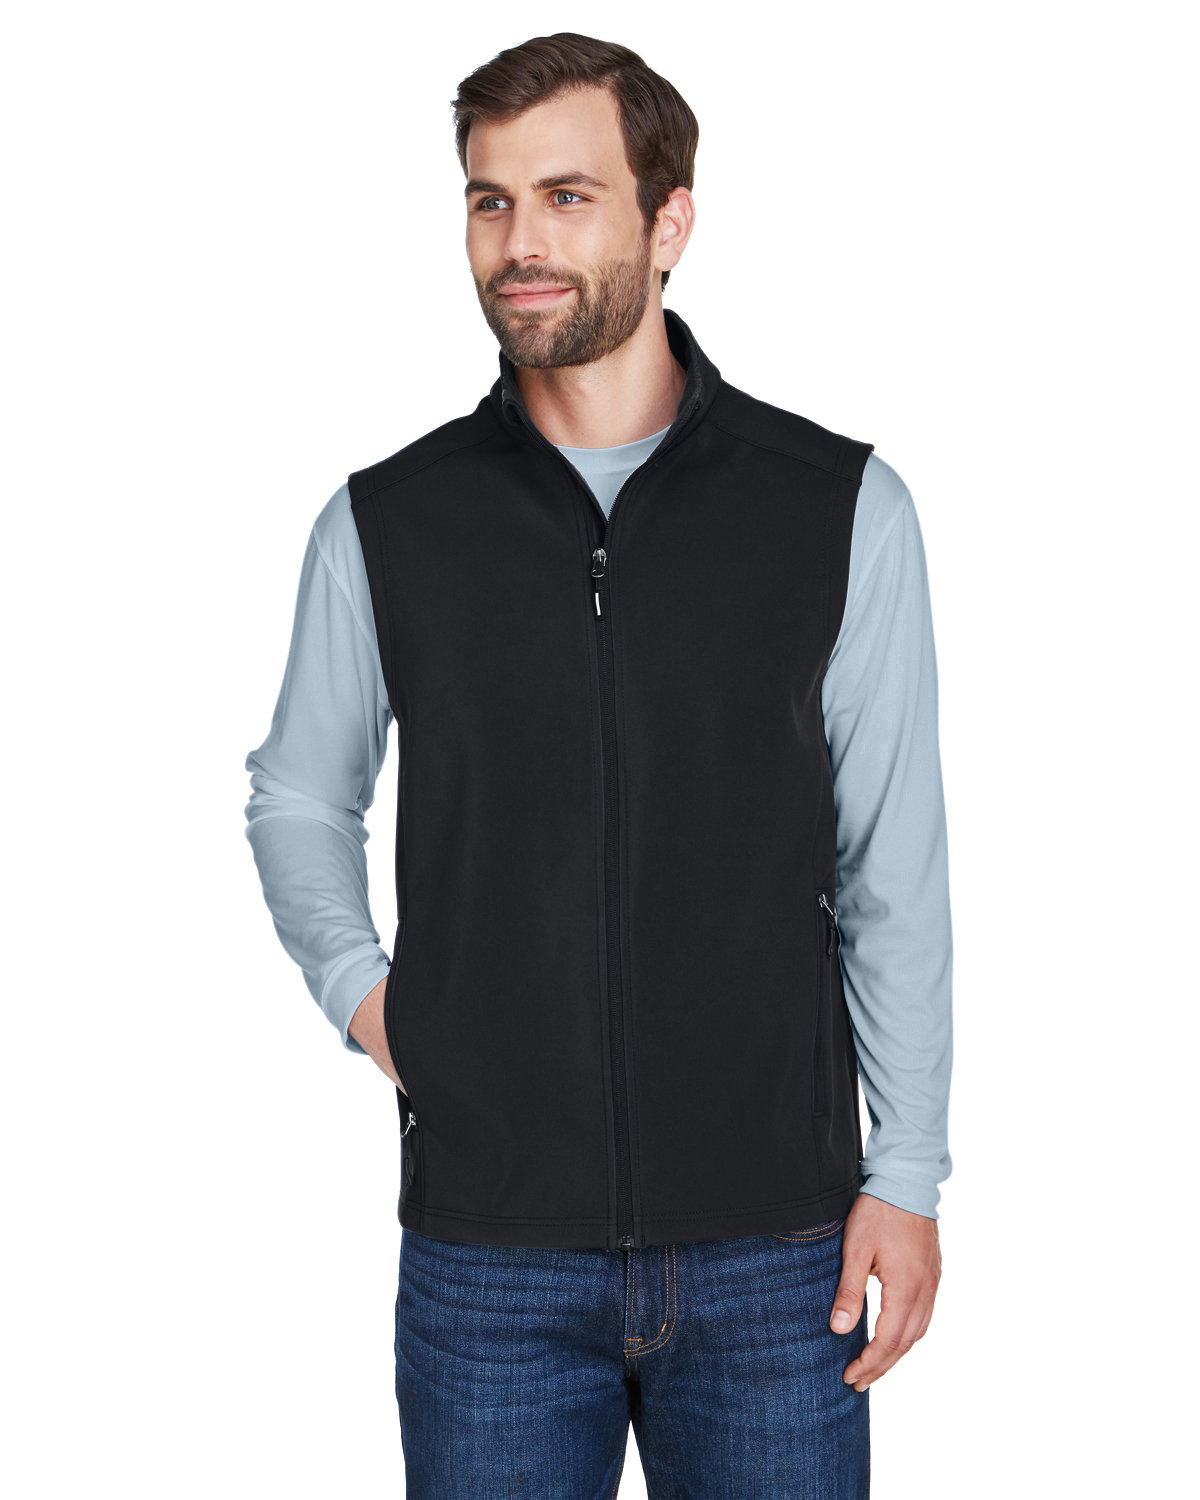 Core 365 Men's Cruise Two-Layer Fleece Bonded Soft Shell Vest BLACK 